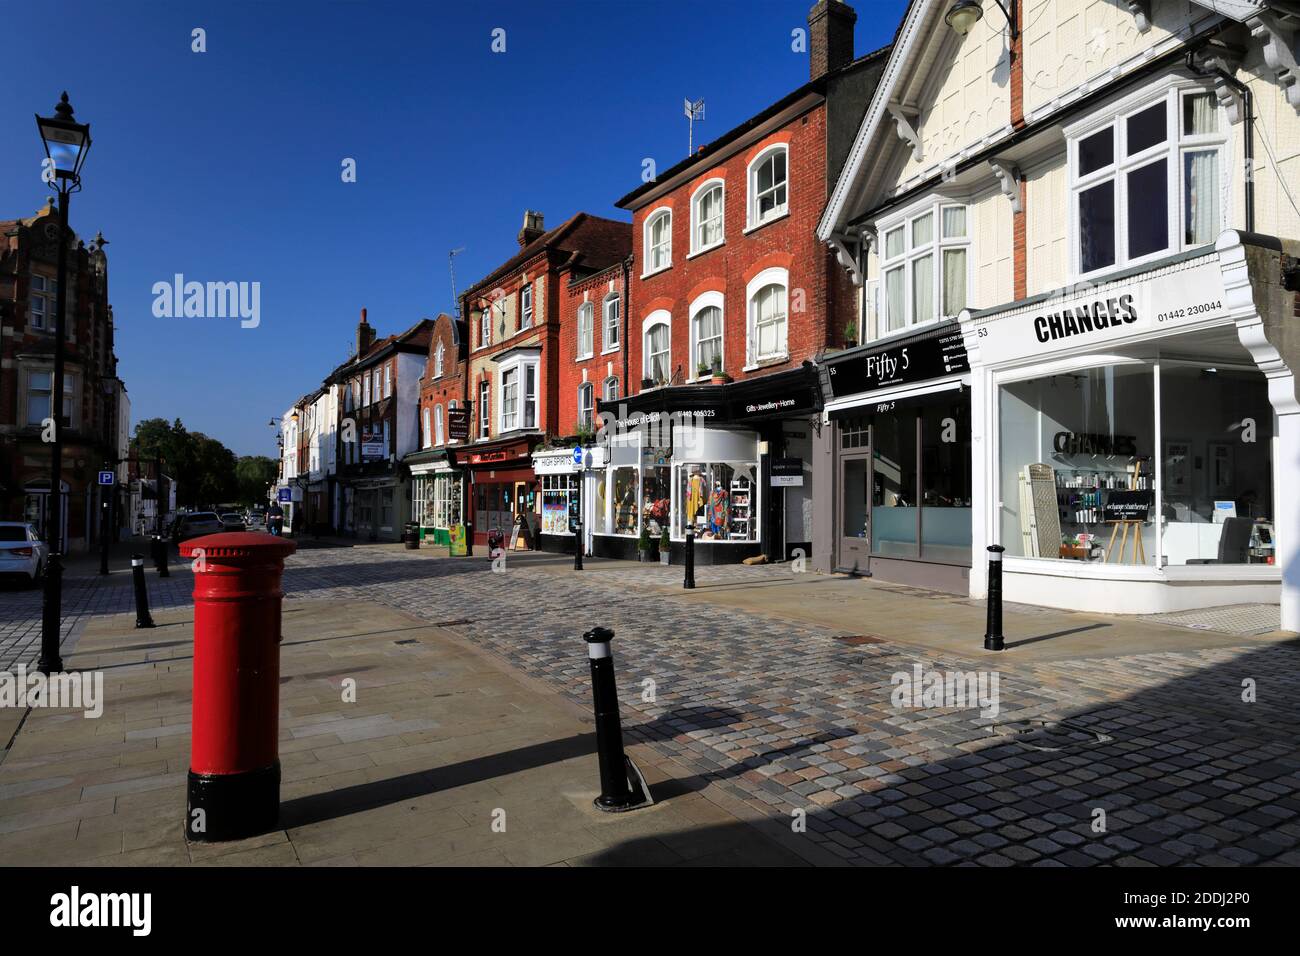 Street view of Old town Hemel Hempstead, Hertfordshire County, England Stock Photo